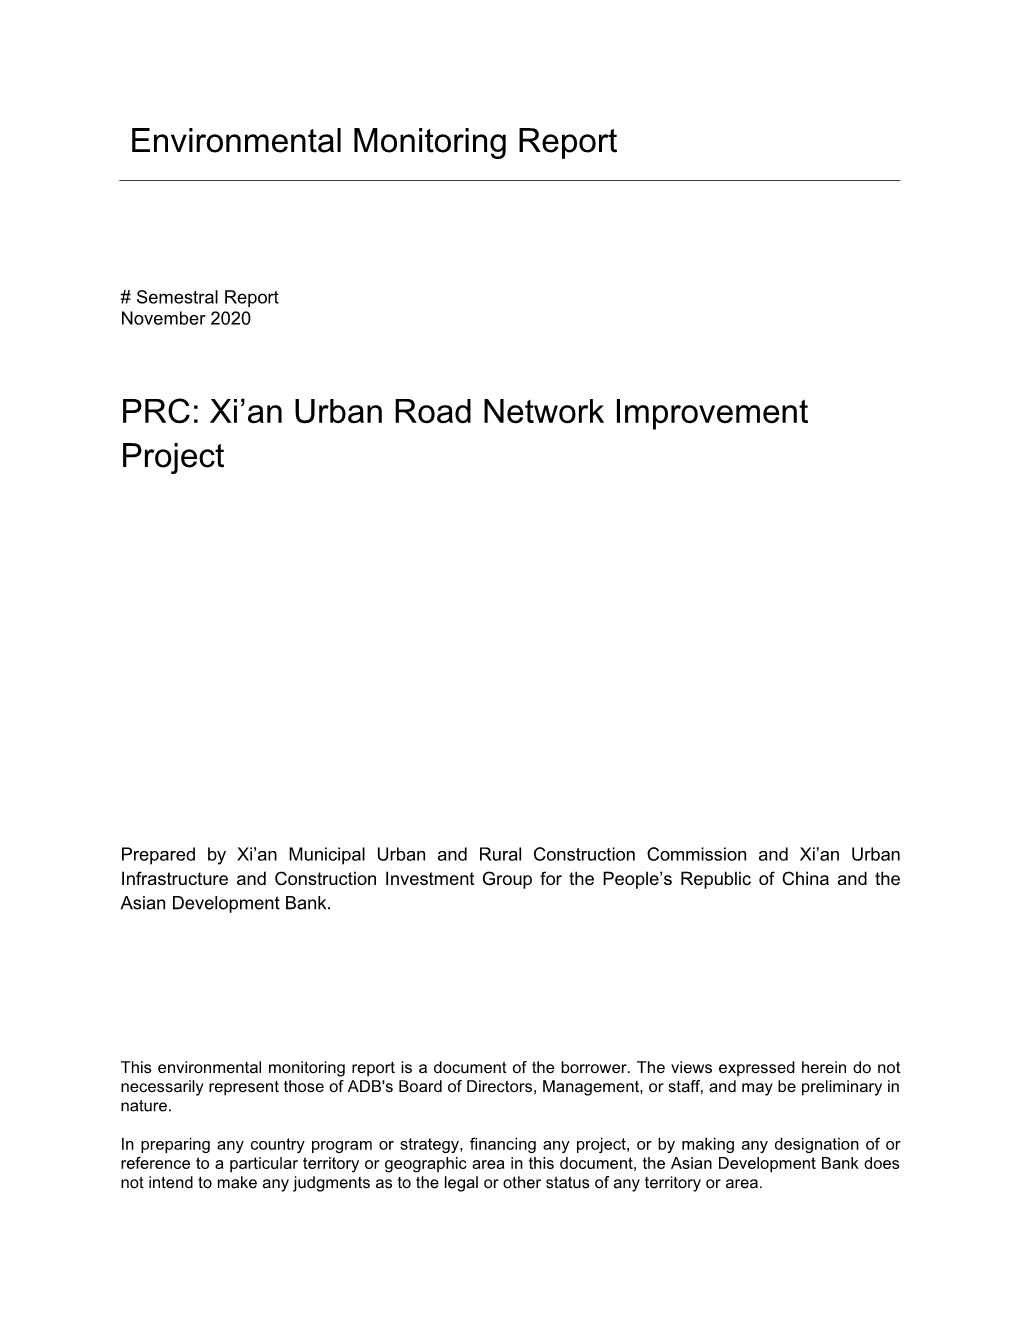 Environmental Monitoring Report PRC: Xi'an Urban Road Network